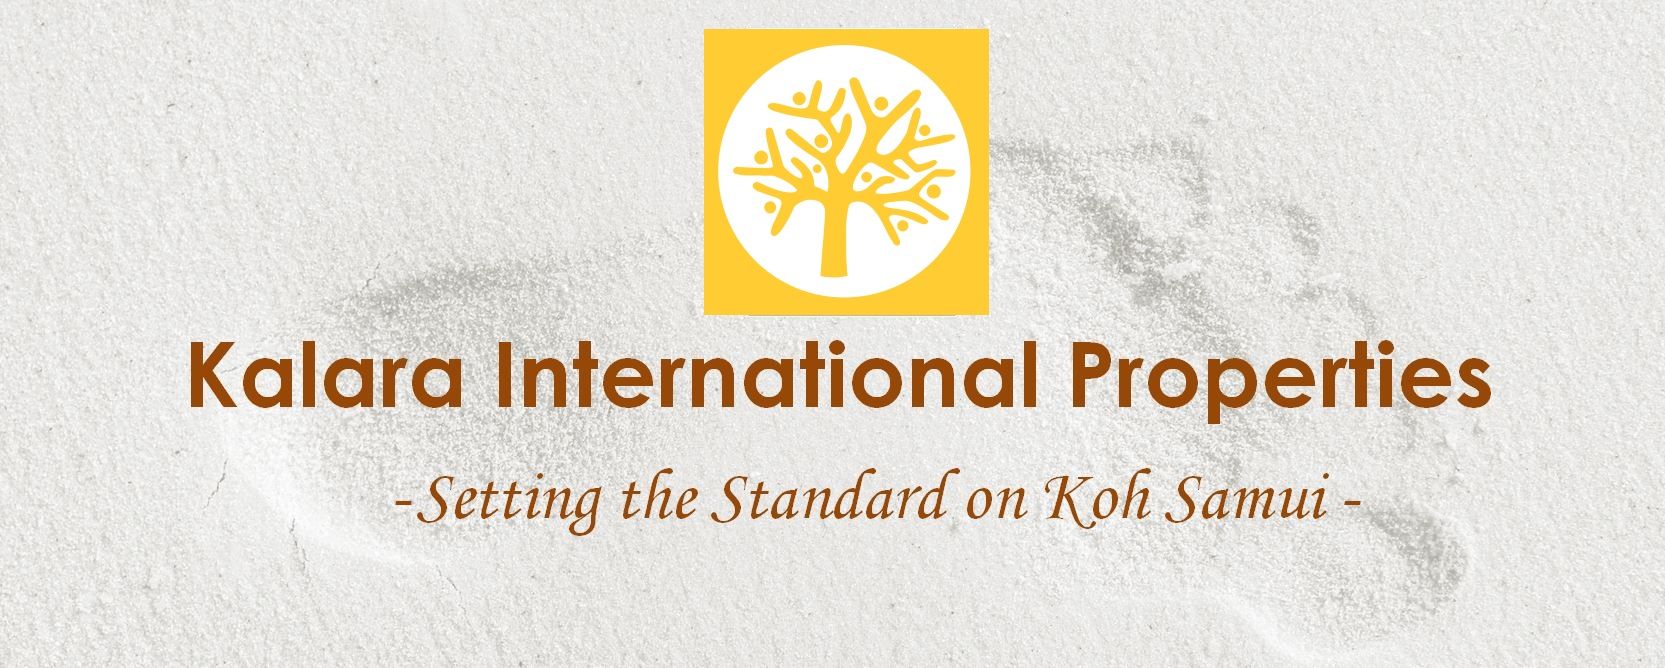 Kalara Developments Co., Ltd. the Standard on Koh Samui